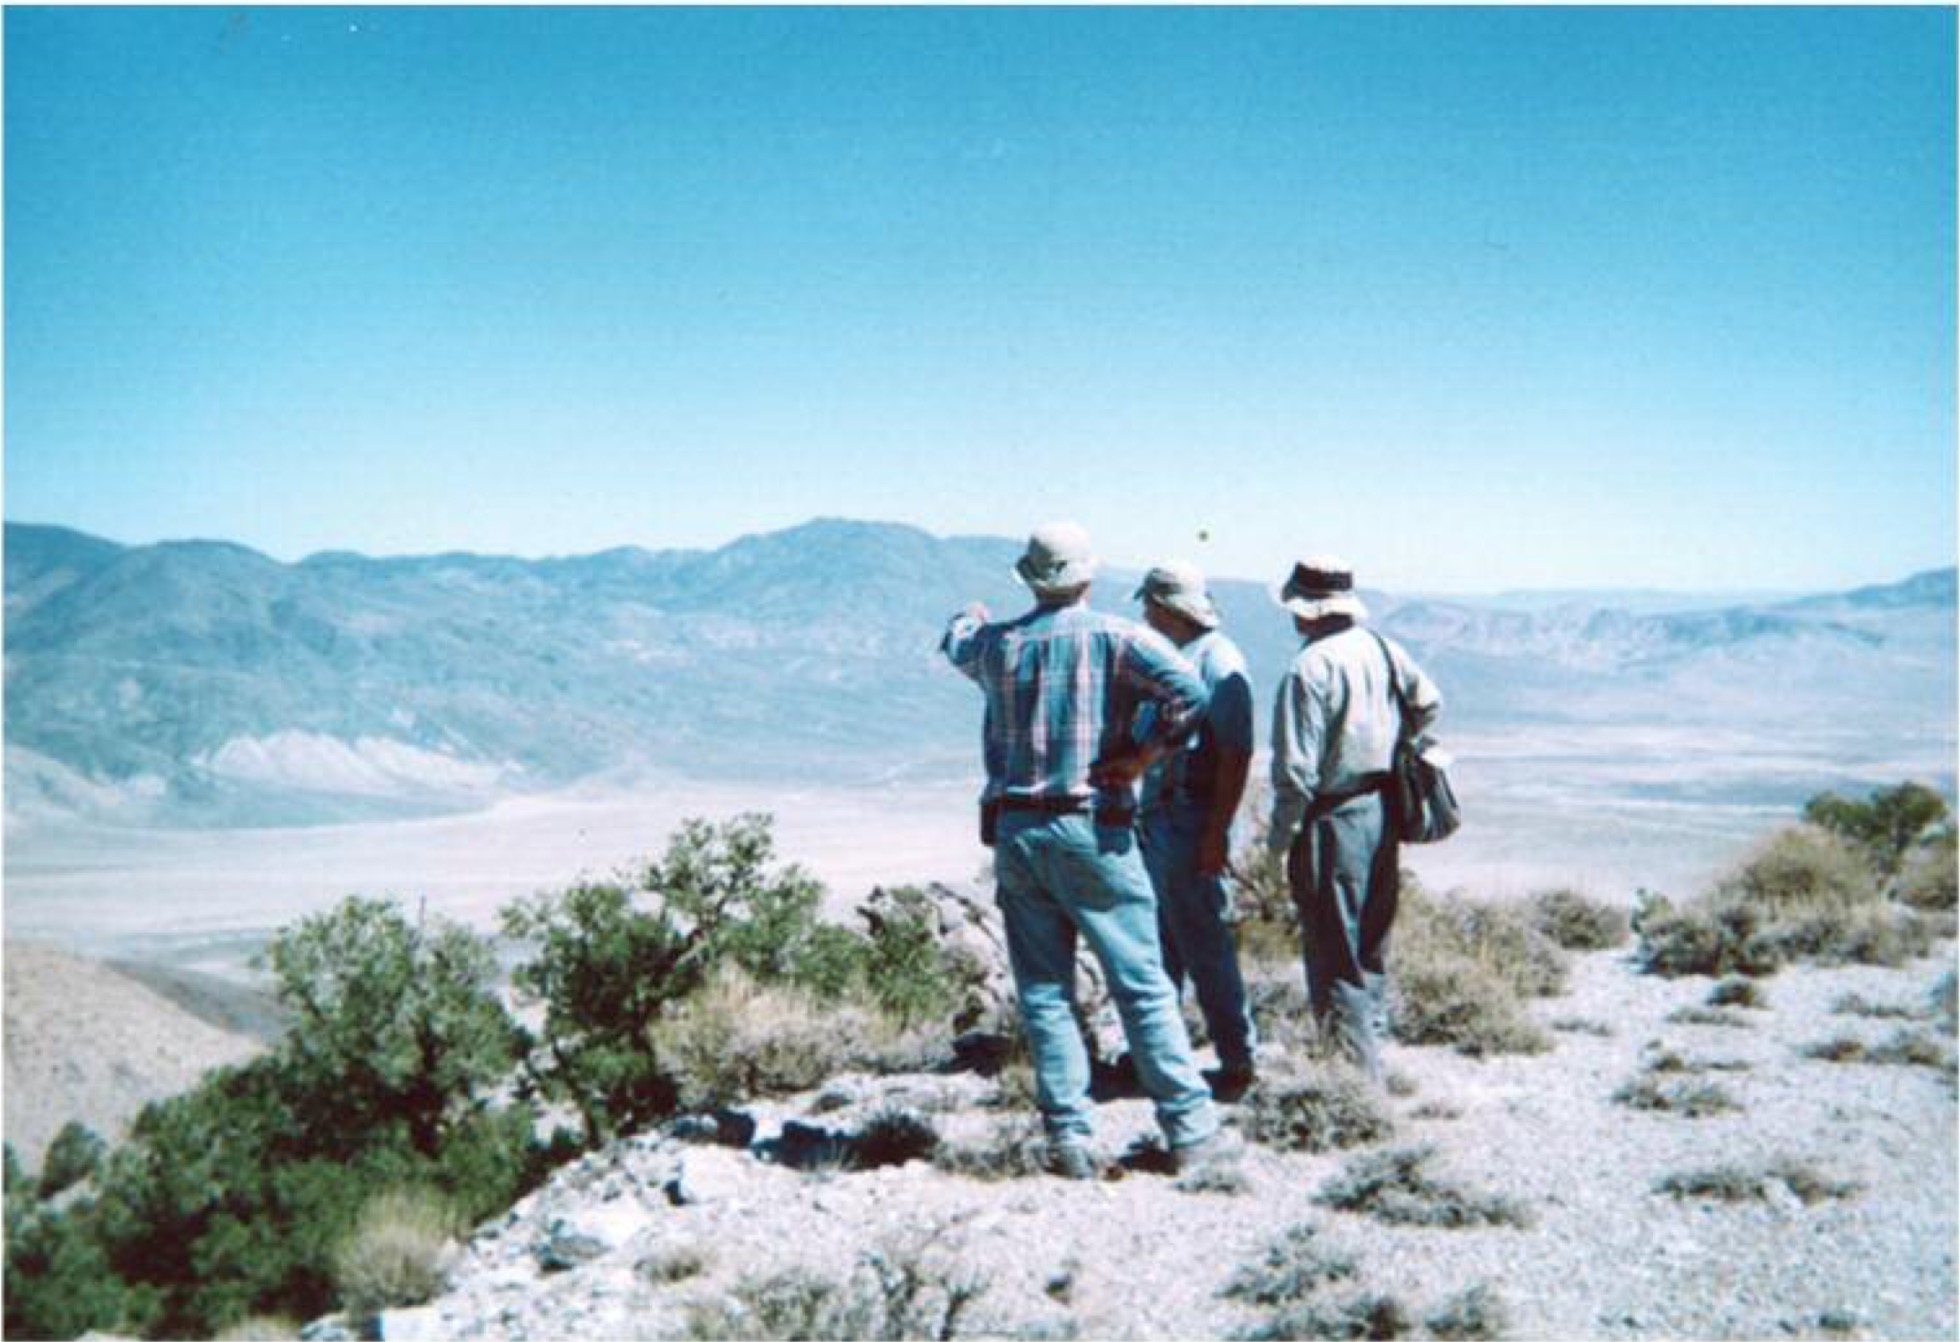 Emmett, far right, prospecting in Nevada. (Photo Courtesy Emmett O'Connell)